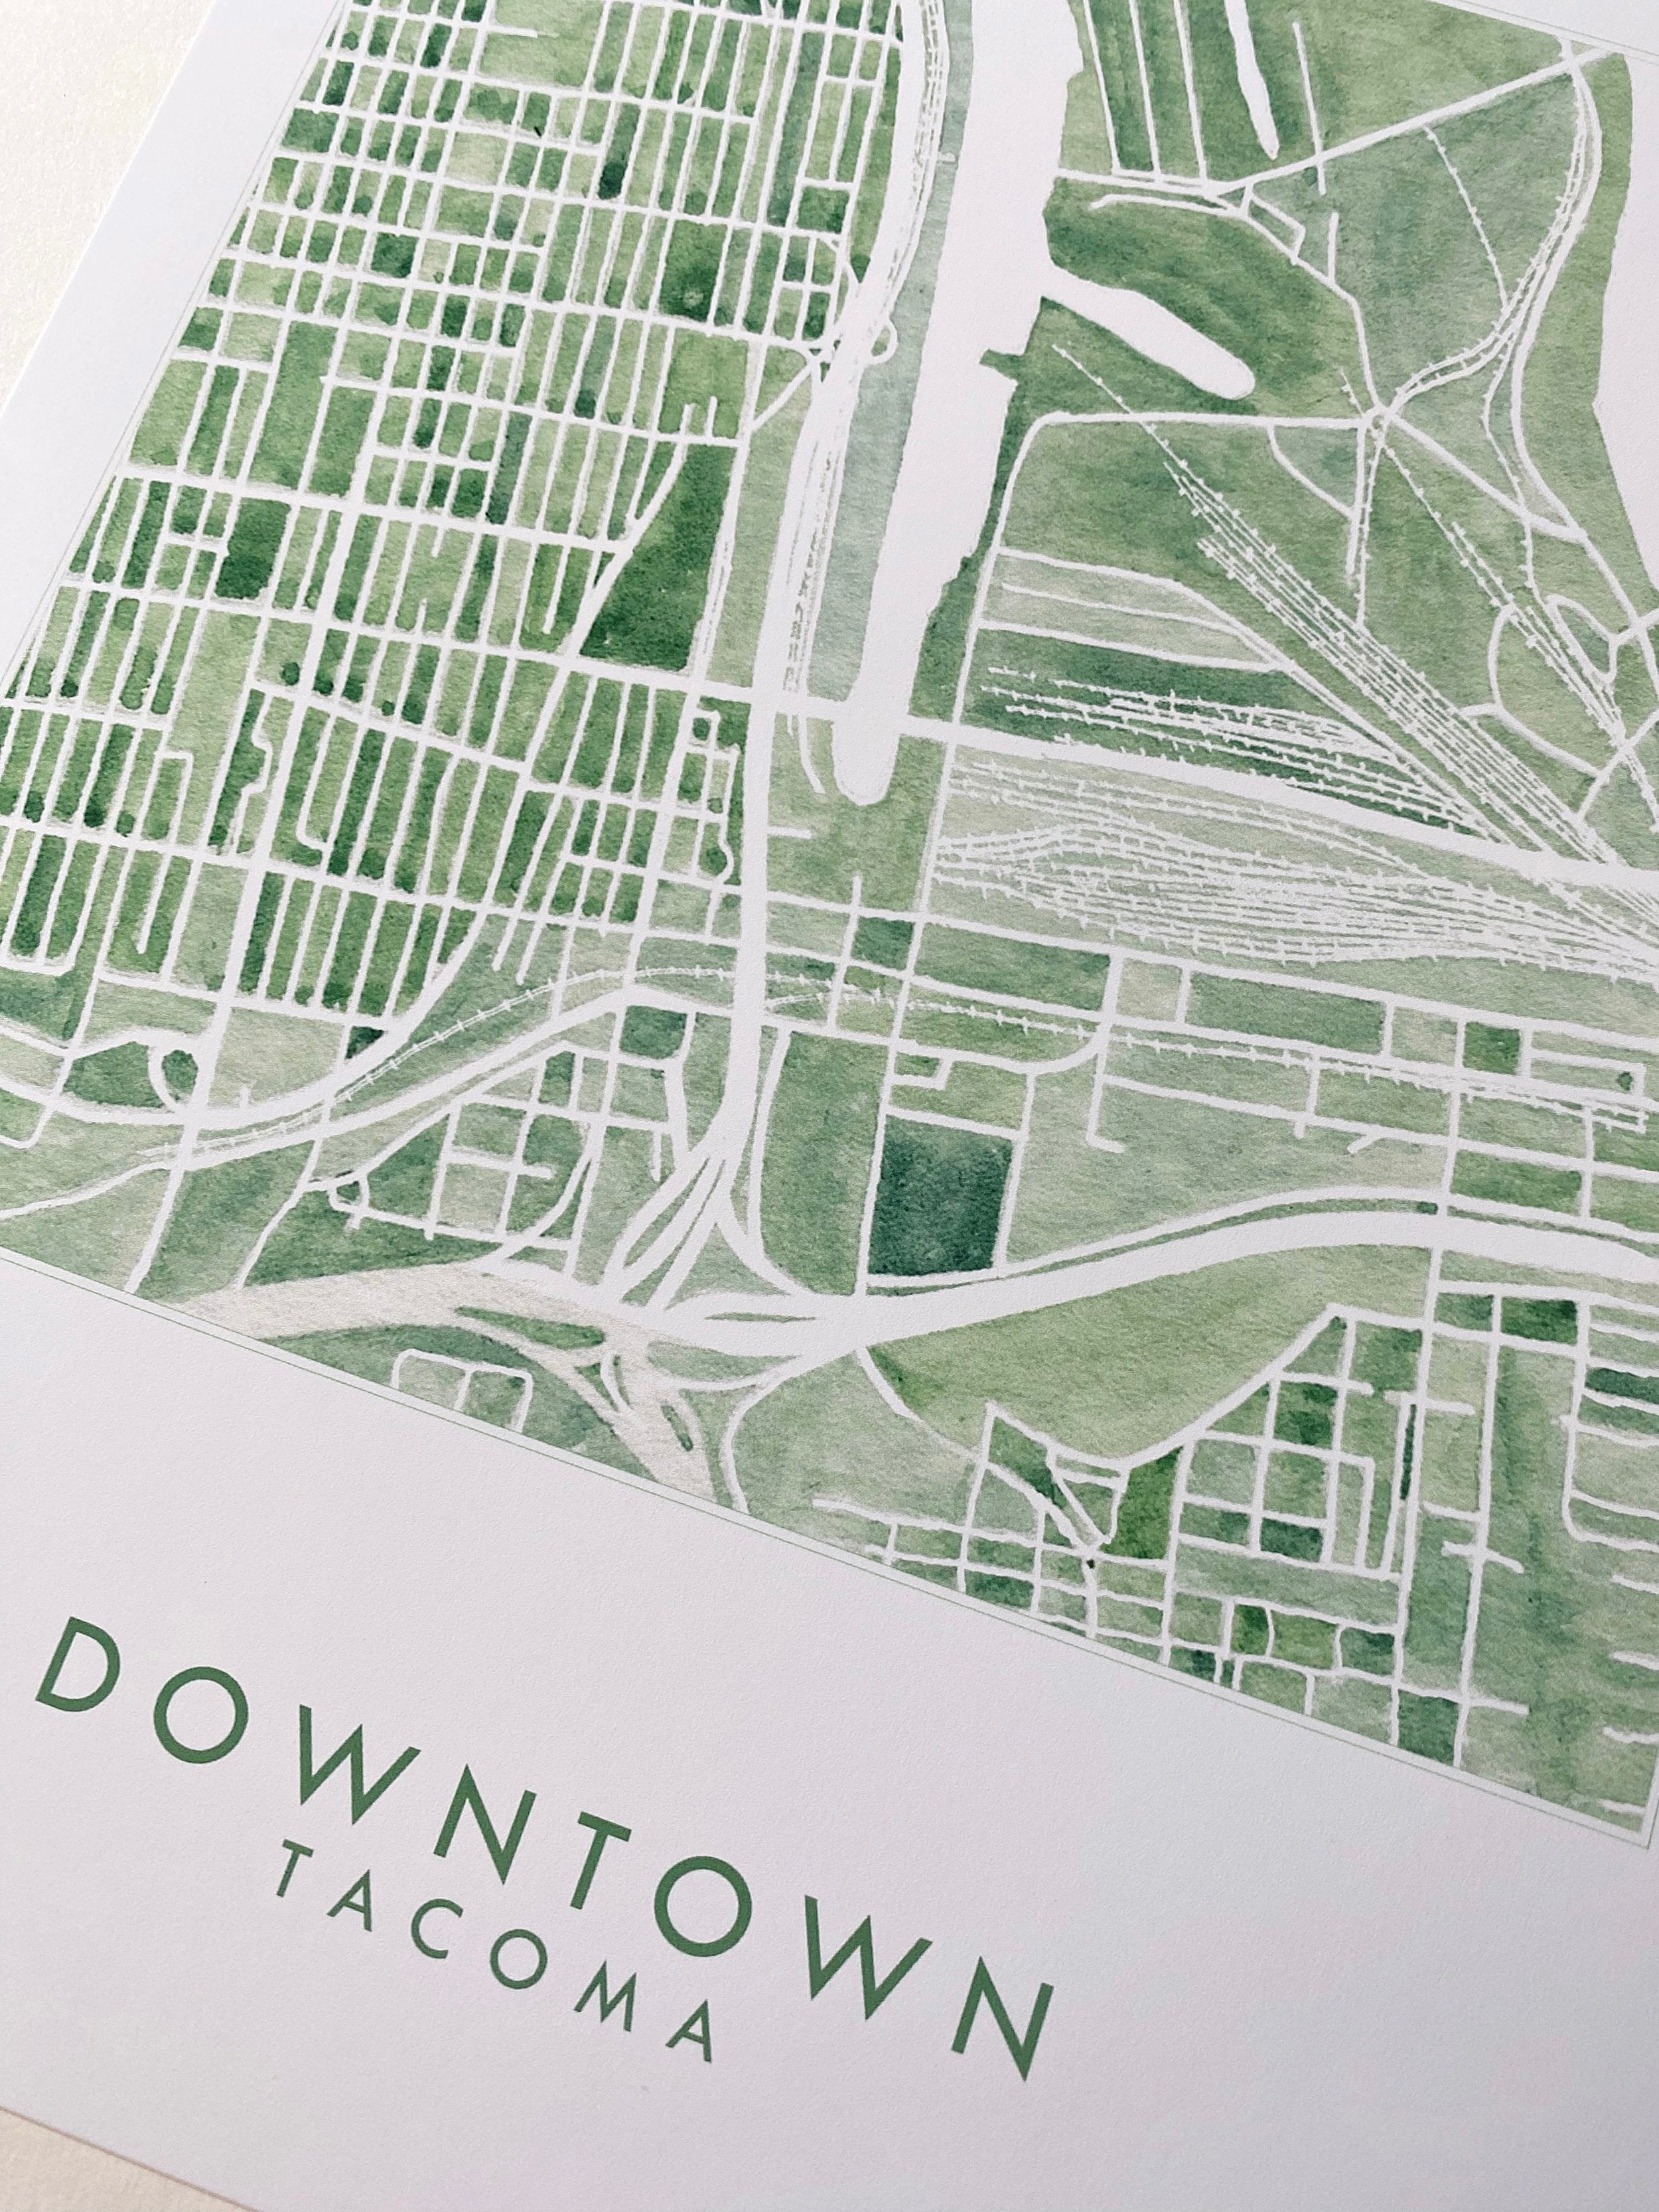 Downtown TACOMA Neighborhood Watercolor Map: PRINT